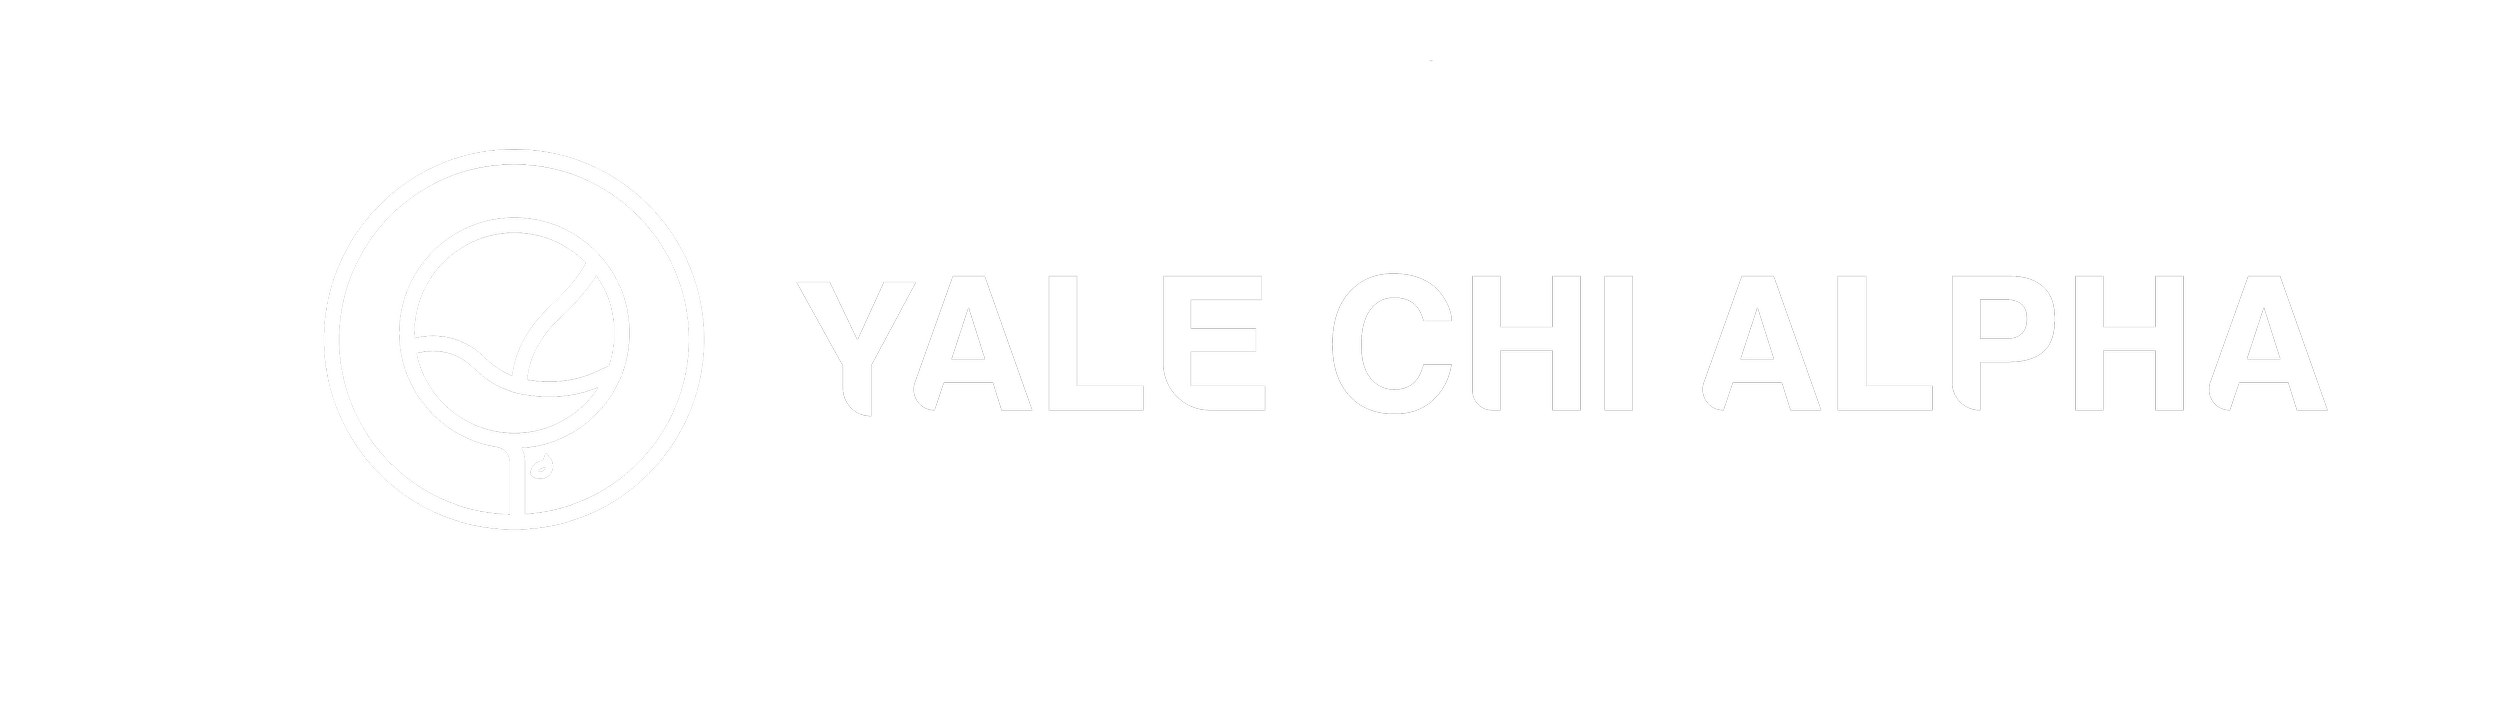 Yale Chi Alpha Christian Fellowship